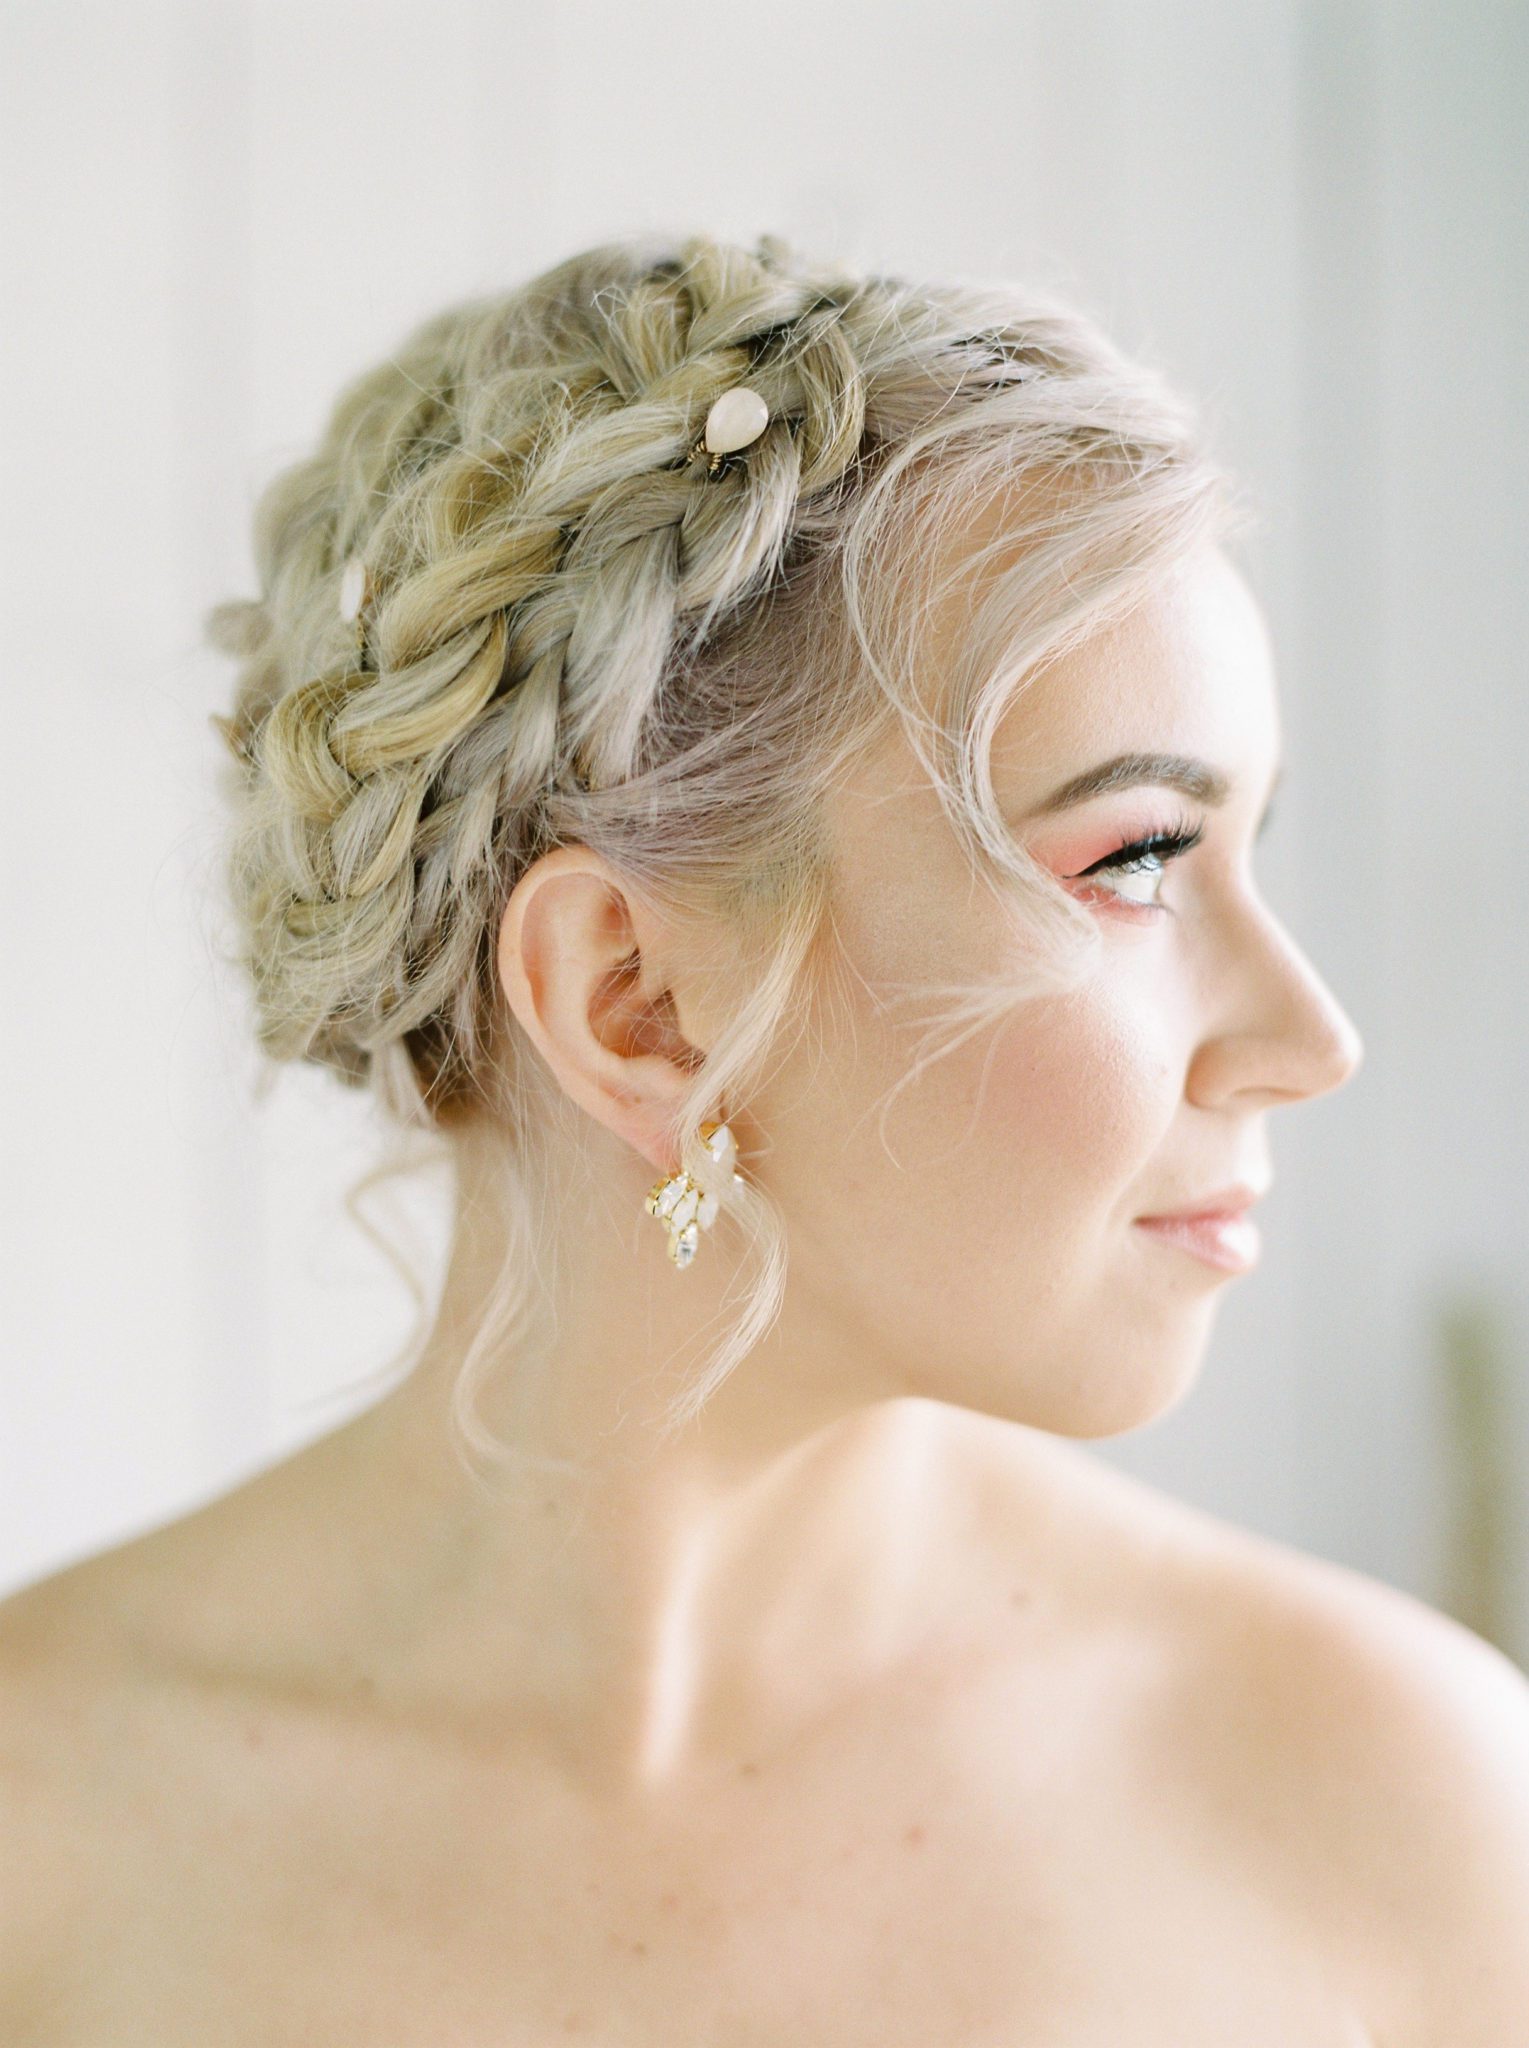 Farmhouse Chic: A Vibrant Wedding Inspiration Shoot at the Gathered | Brontë Bride Blog - Bride Getting Ready